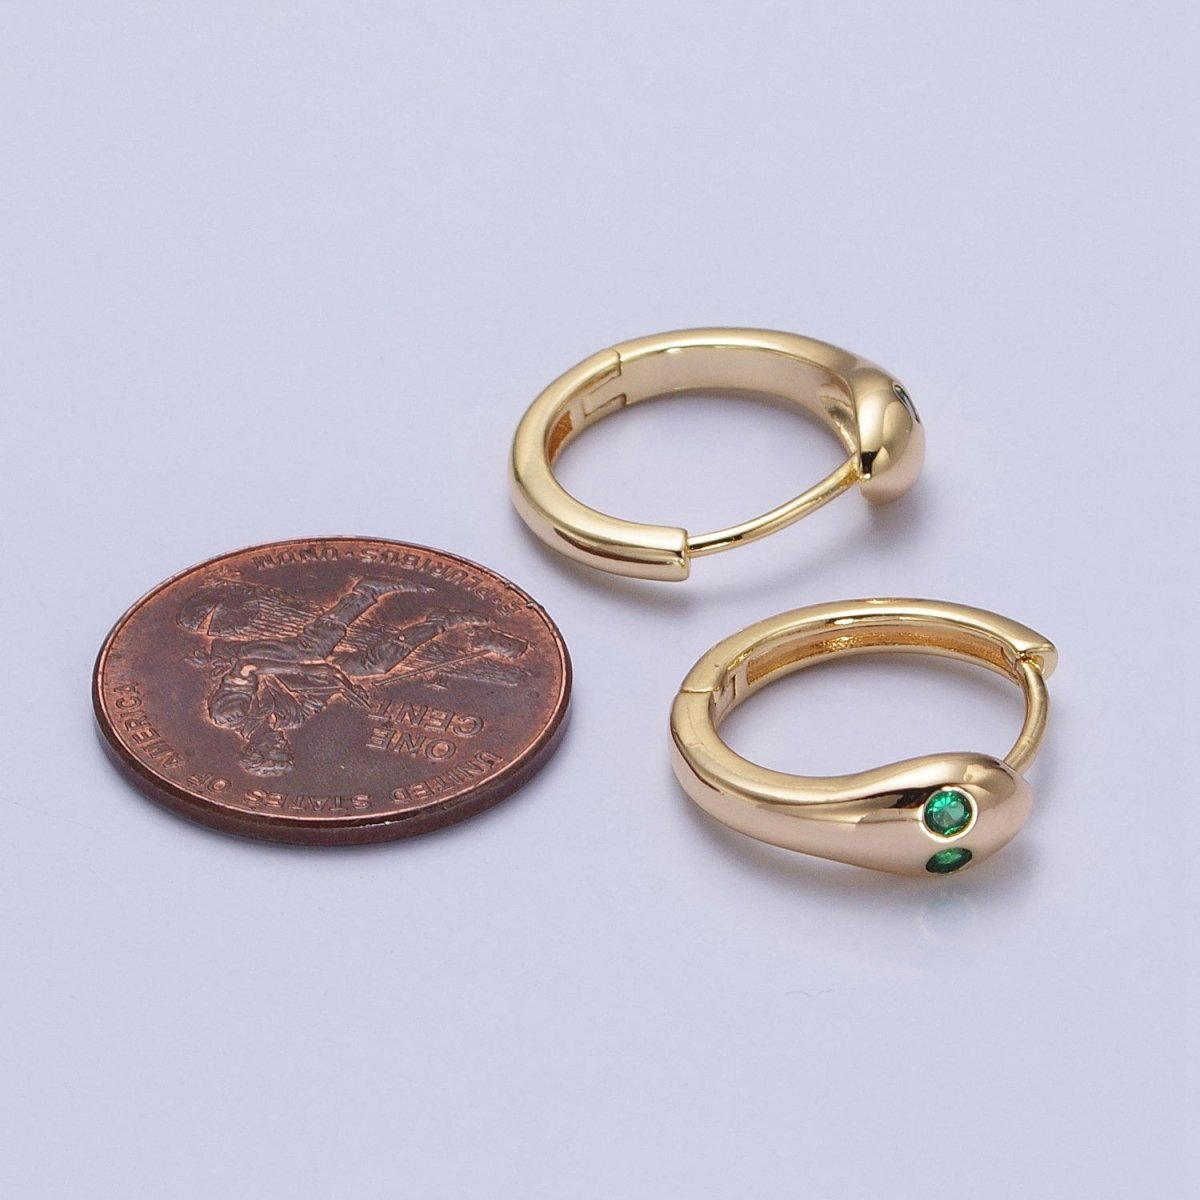 Gold, Silver Green-Eyed CZ Snake Serpent Minimalist Huggie Earrings | AB557 AB558 - DLUXCA